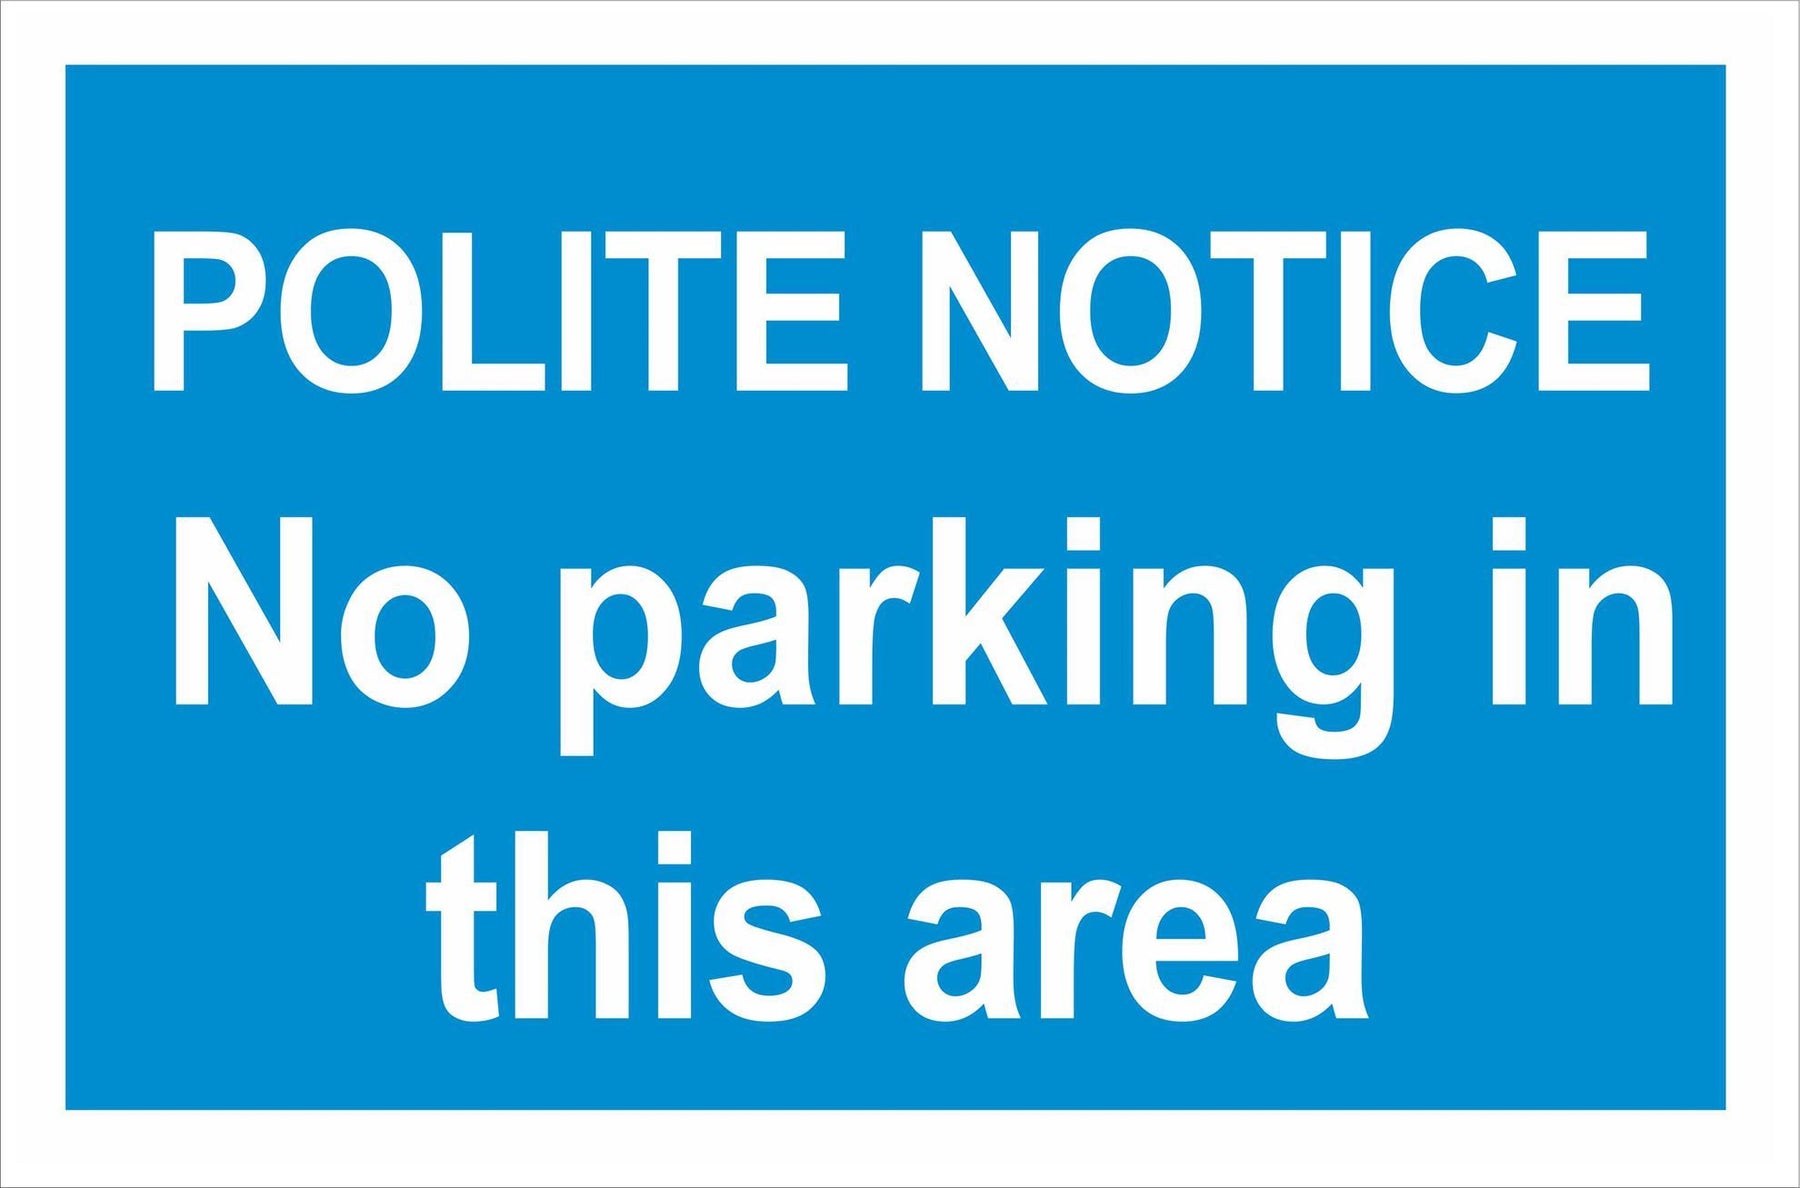 POLITE NOTICE No parking in this area